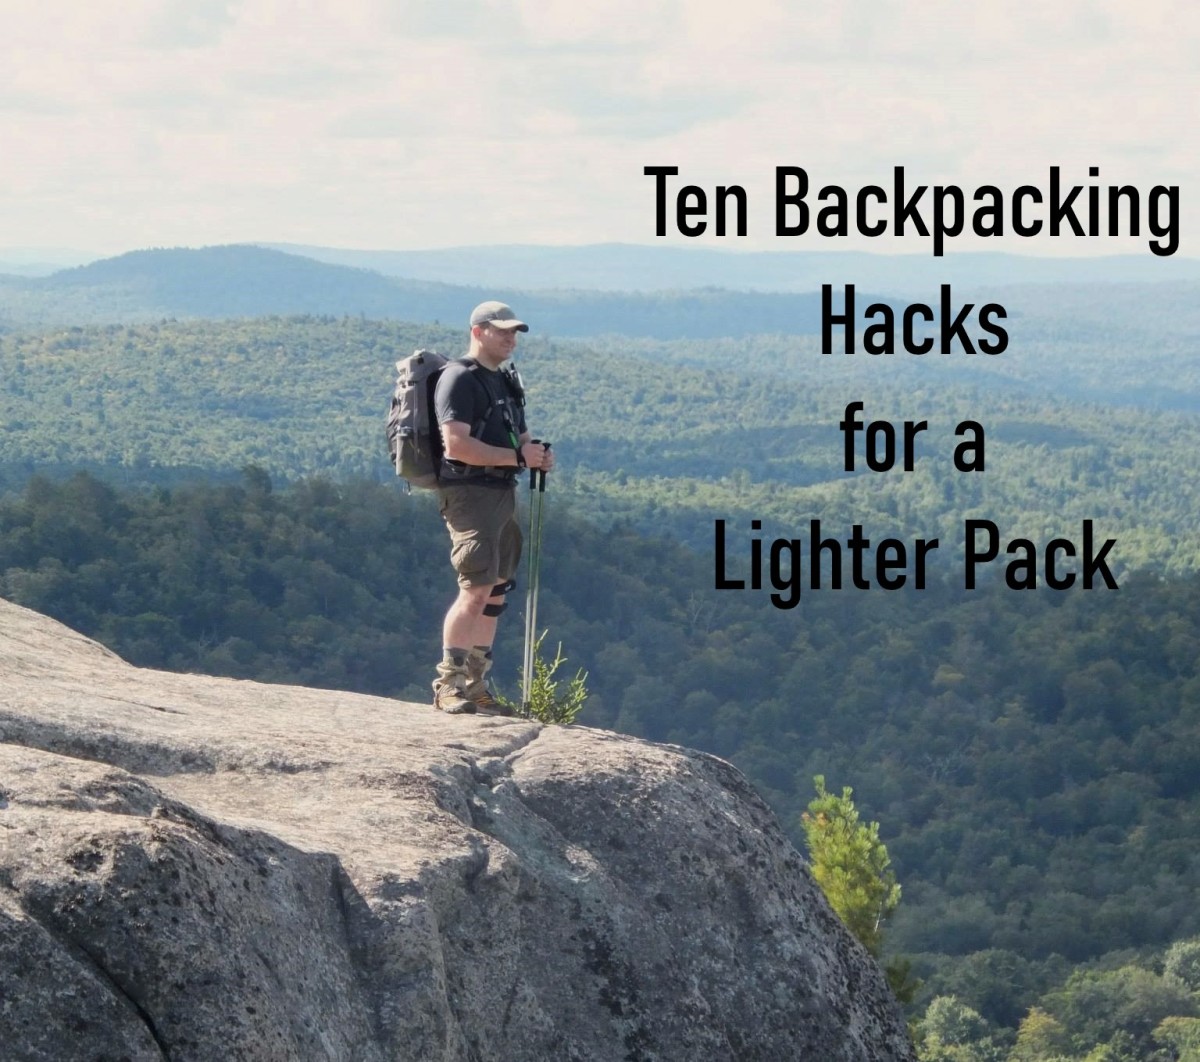 10 Backpacking Hacks for a Lighter Pack